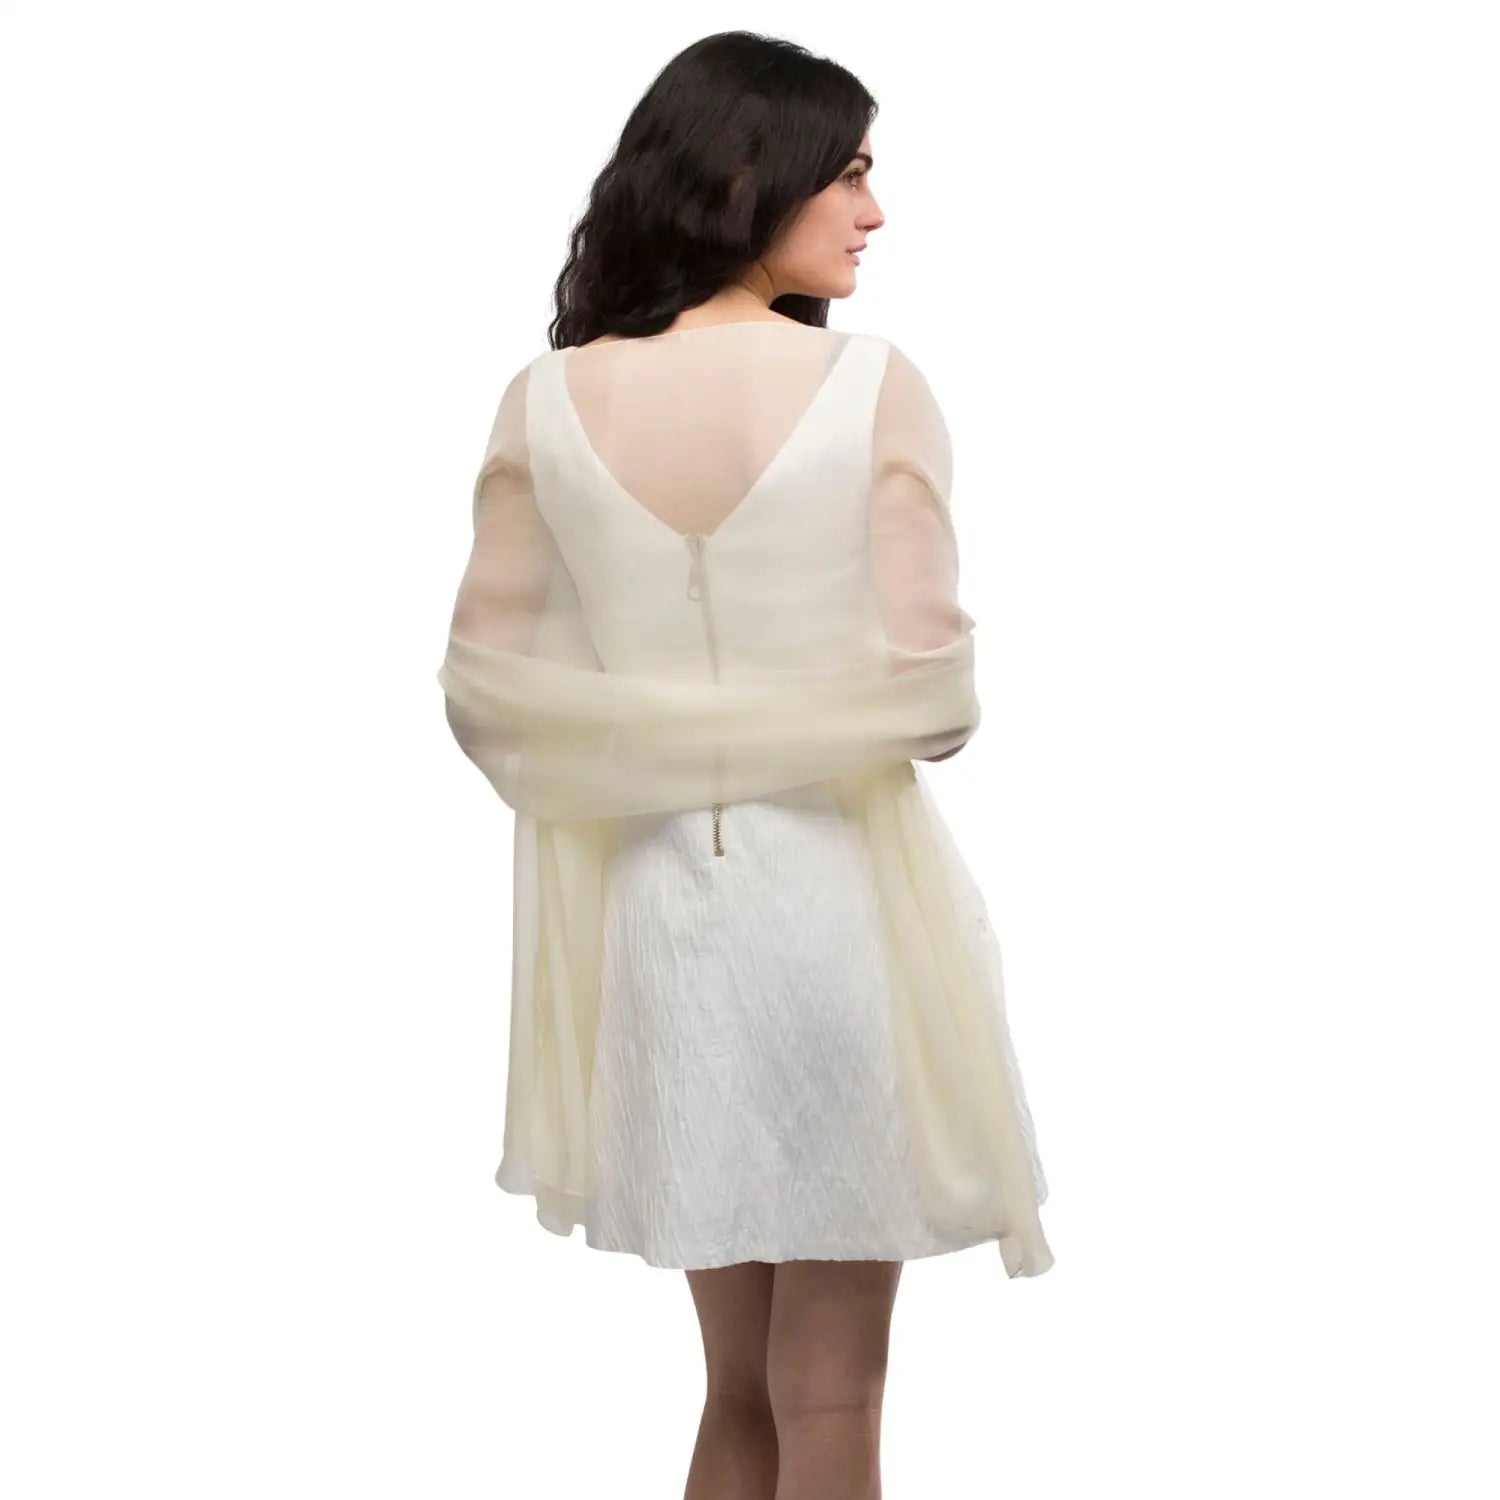 Woman in white dress and semi-opaque plain chiffon shawl.